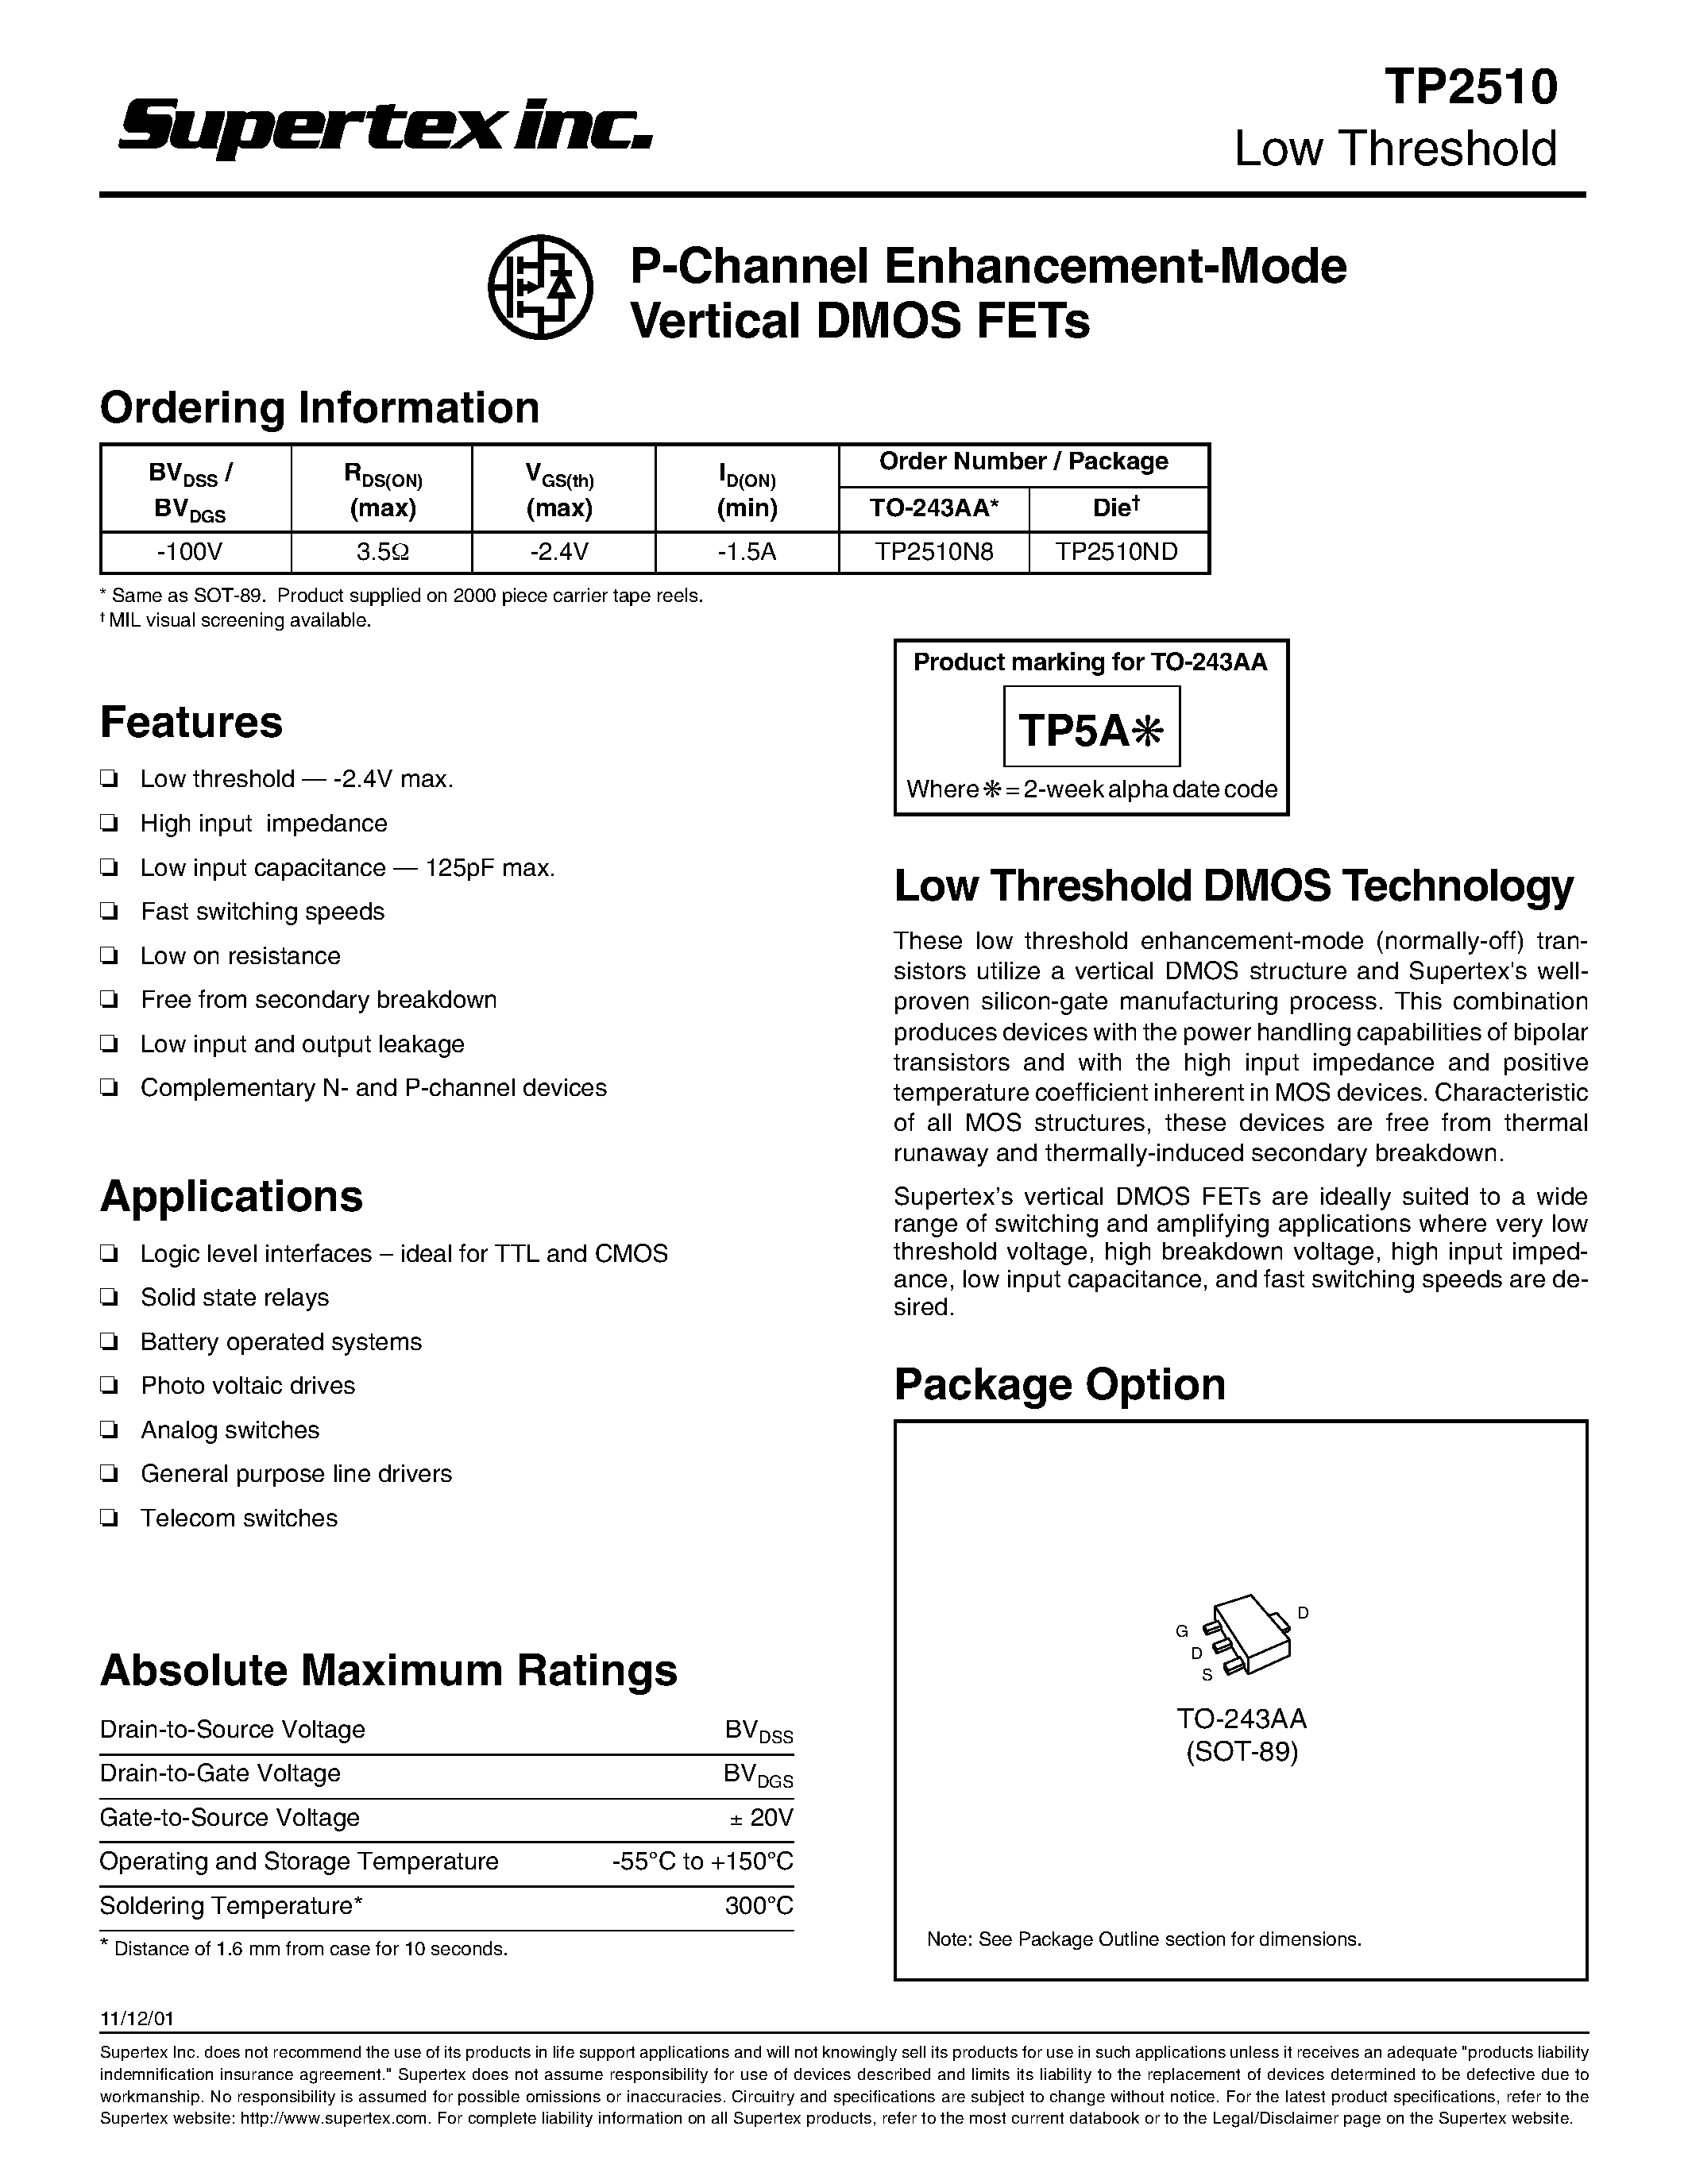 Datasheet TP2510ND - P-Channel Enhancement-Mode Vertical DMOS FETs page 1